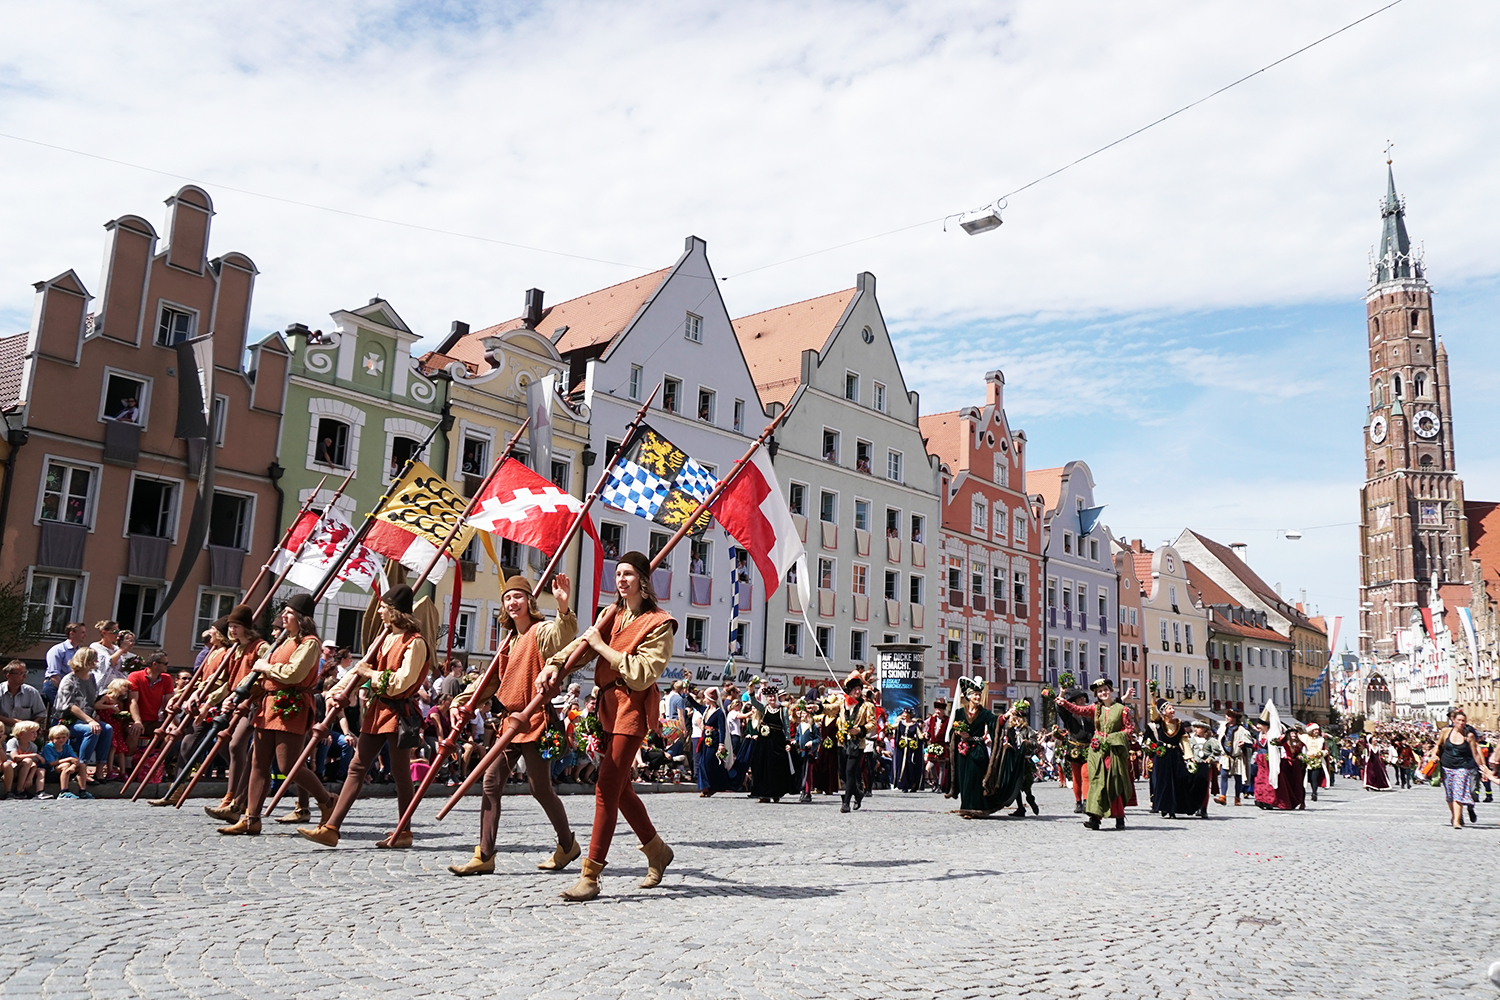 Boda de Landshut: desfile del domingo